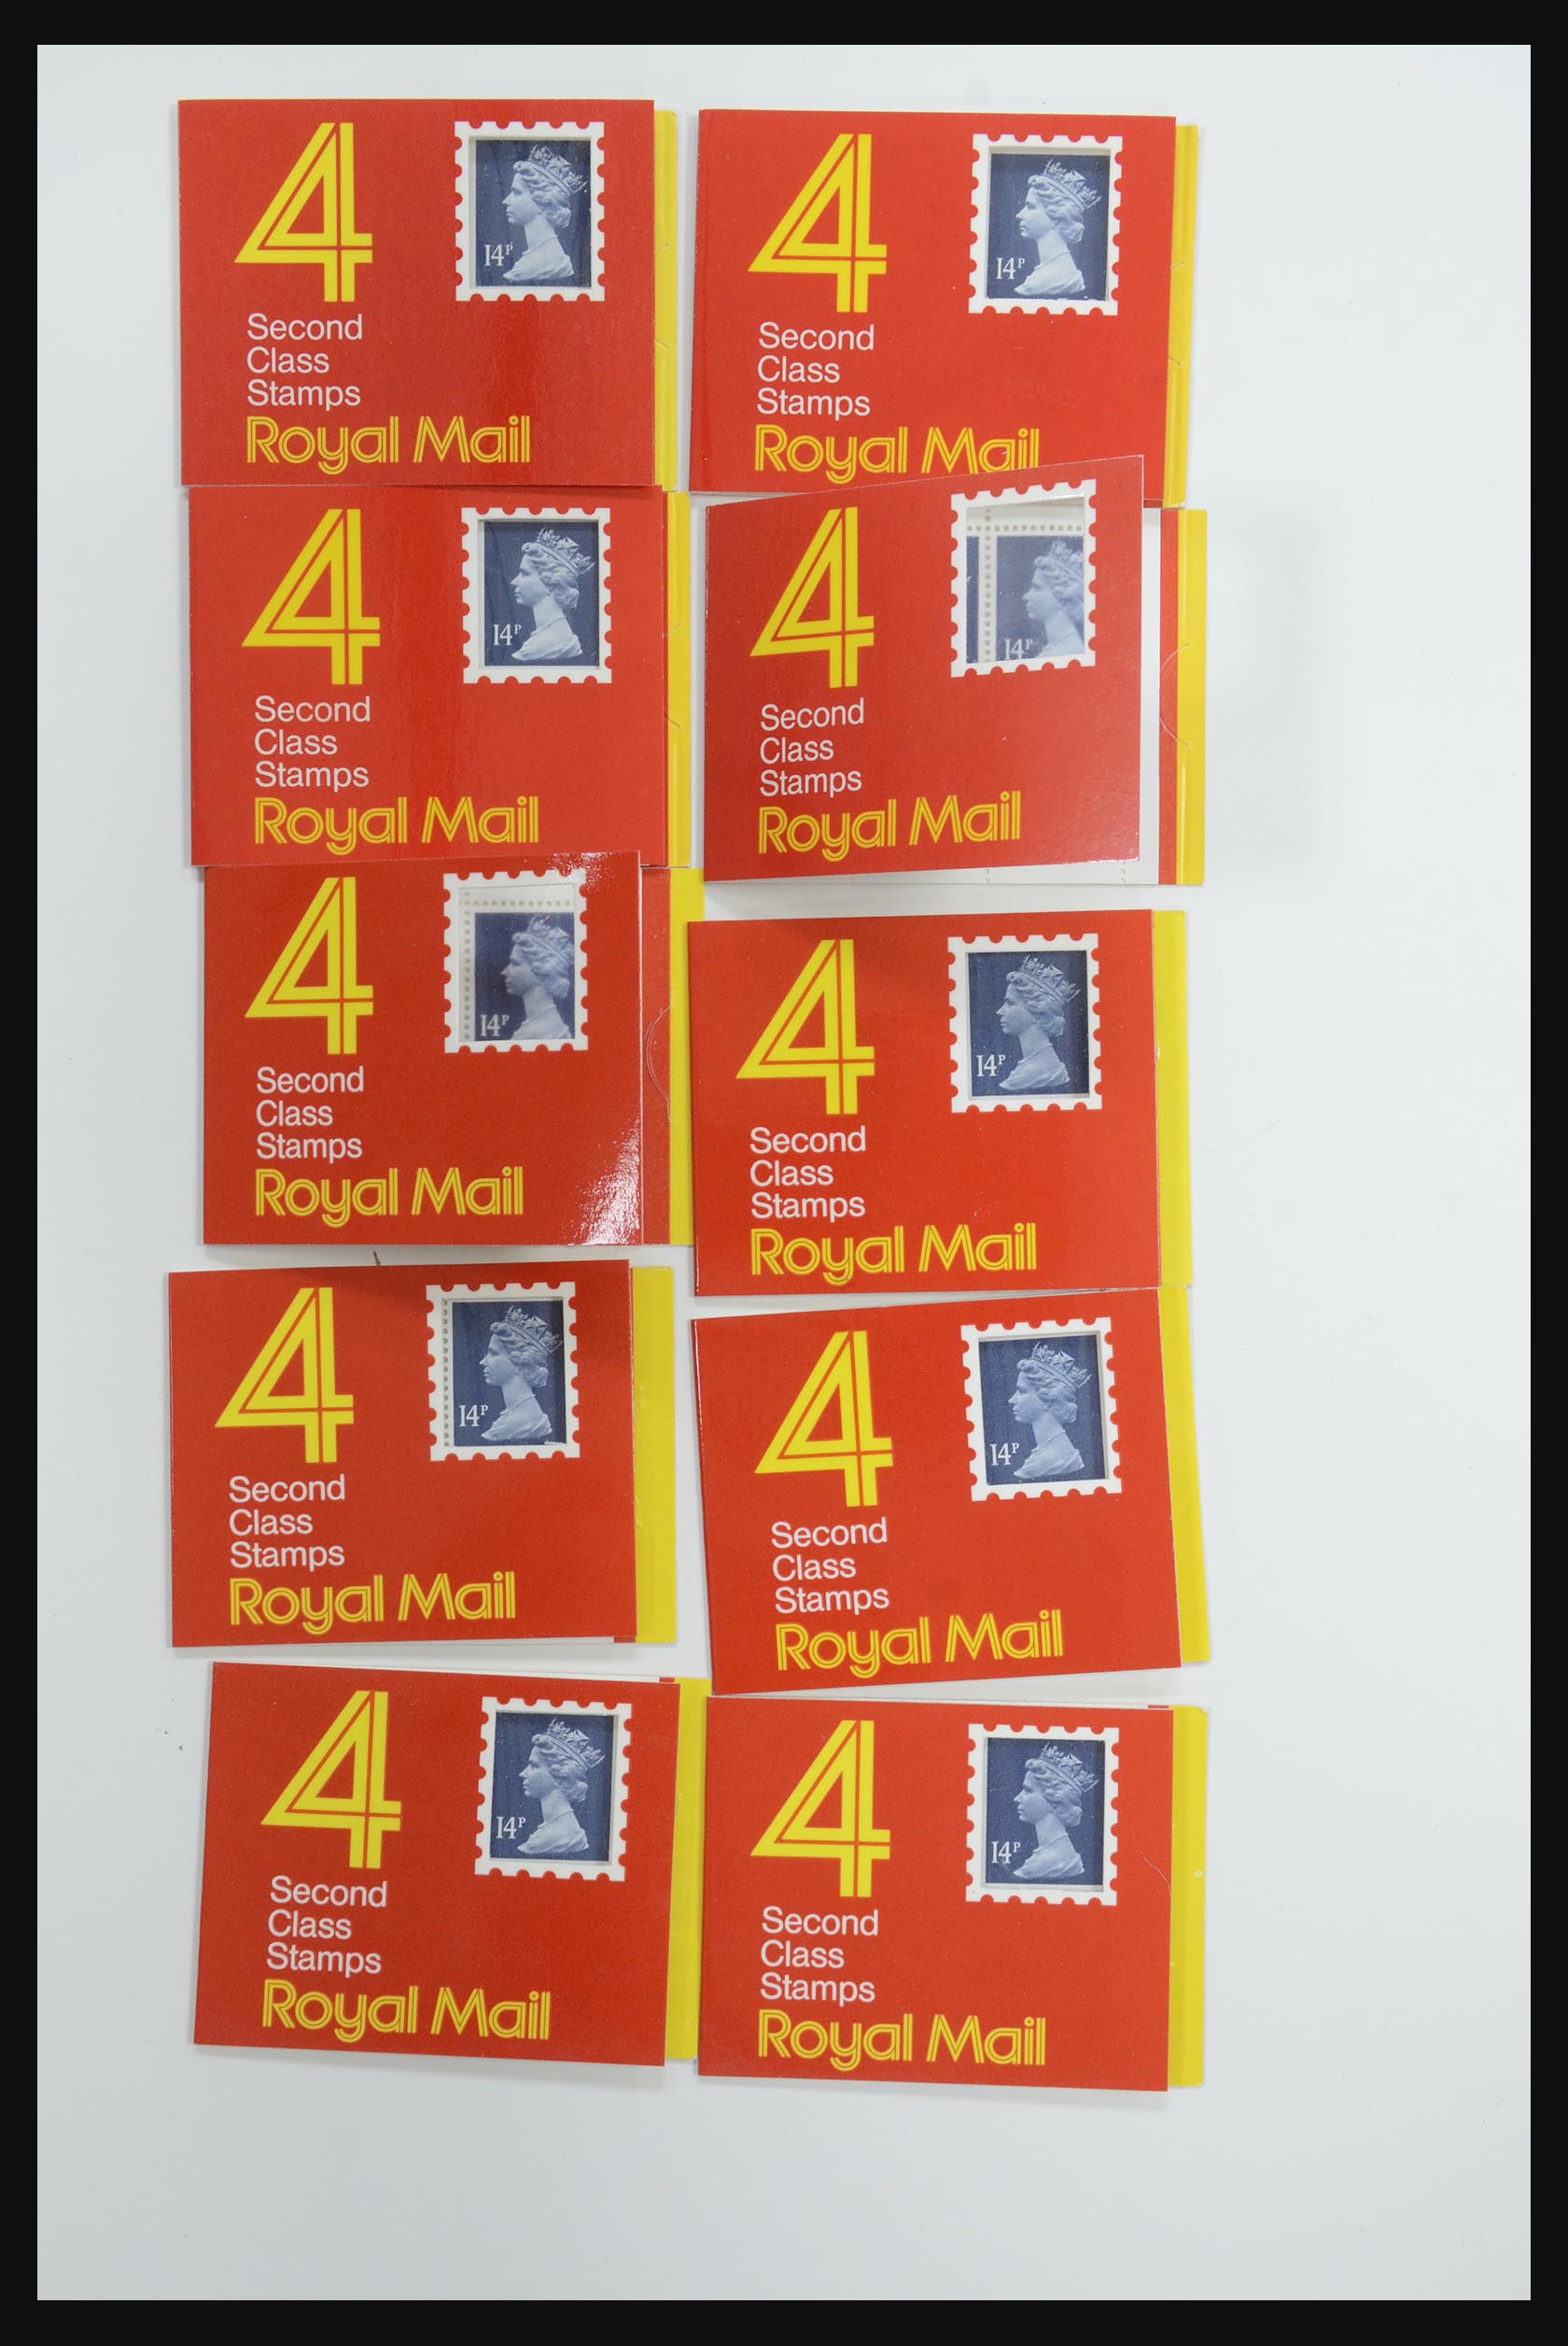 31961 056 - 31961 Great Britain stampbooklets 1971-1999.